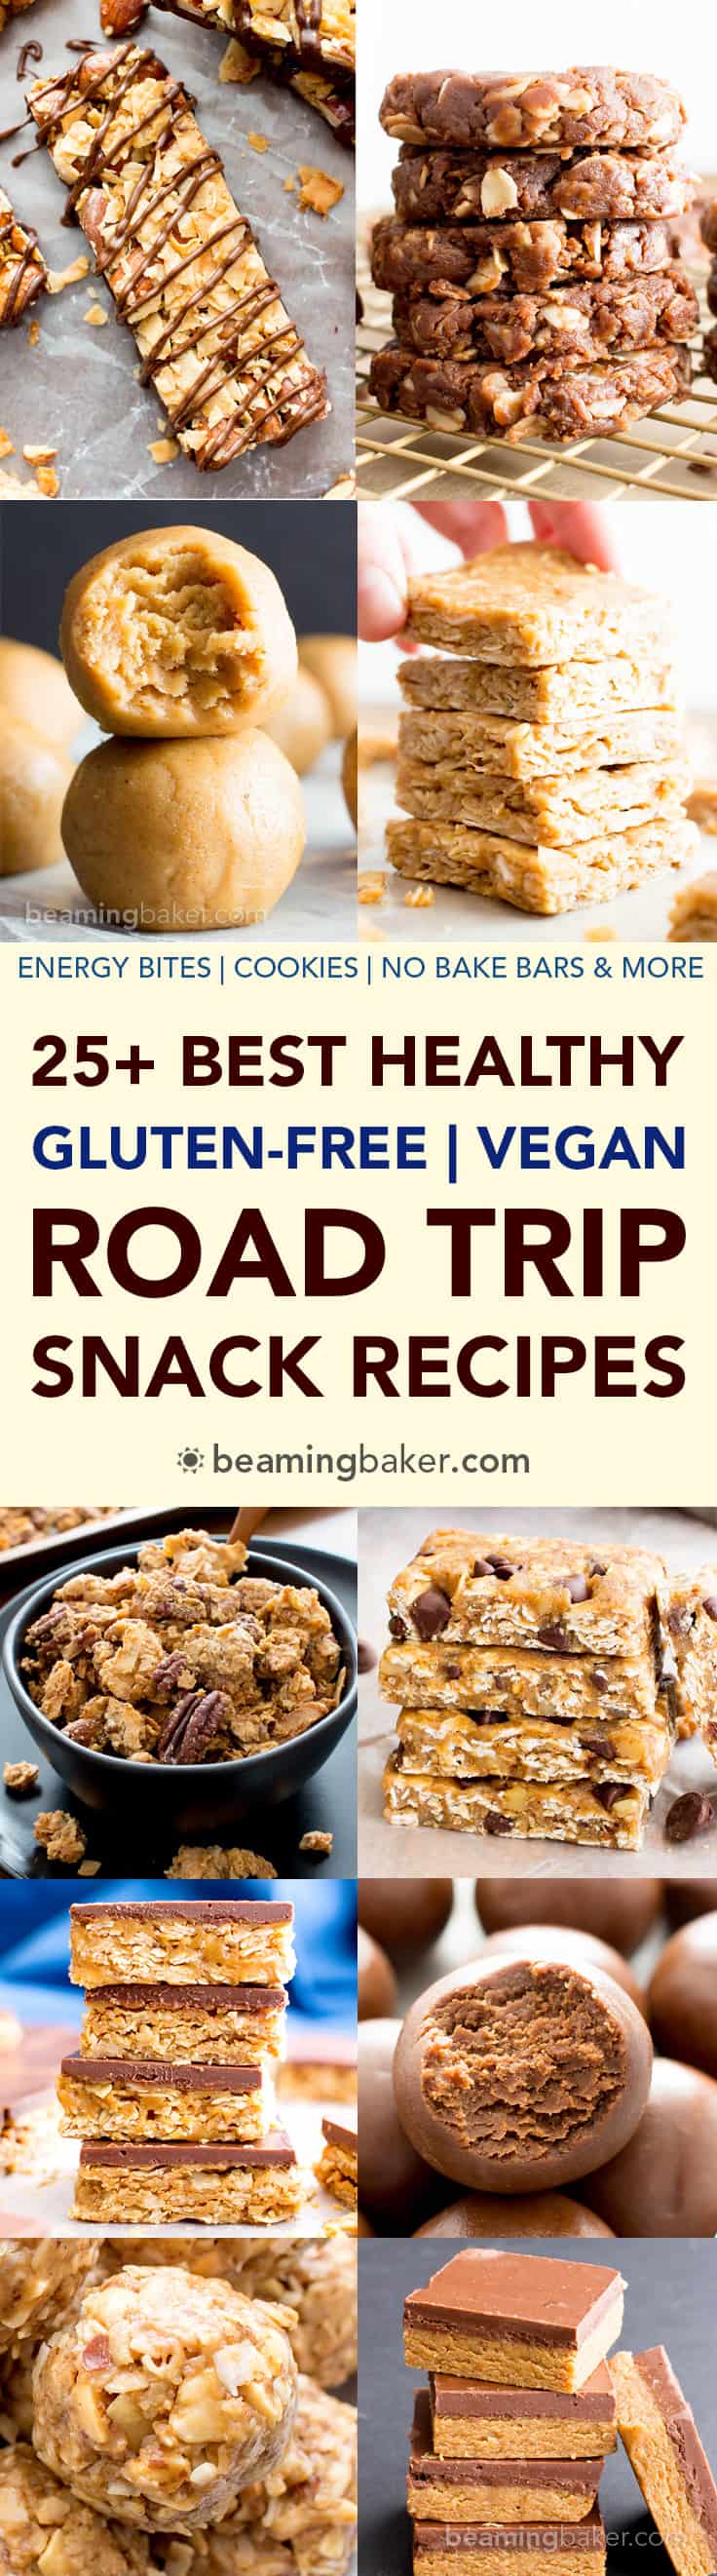 25+ Best Healthy Road Trip Snacks Recipes (Vegan, Gluten-Free, Dairy